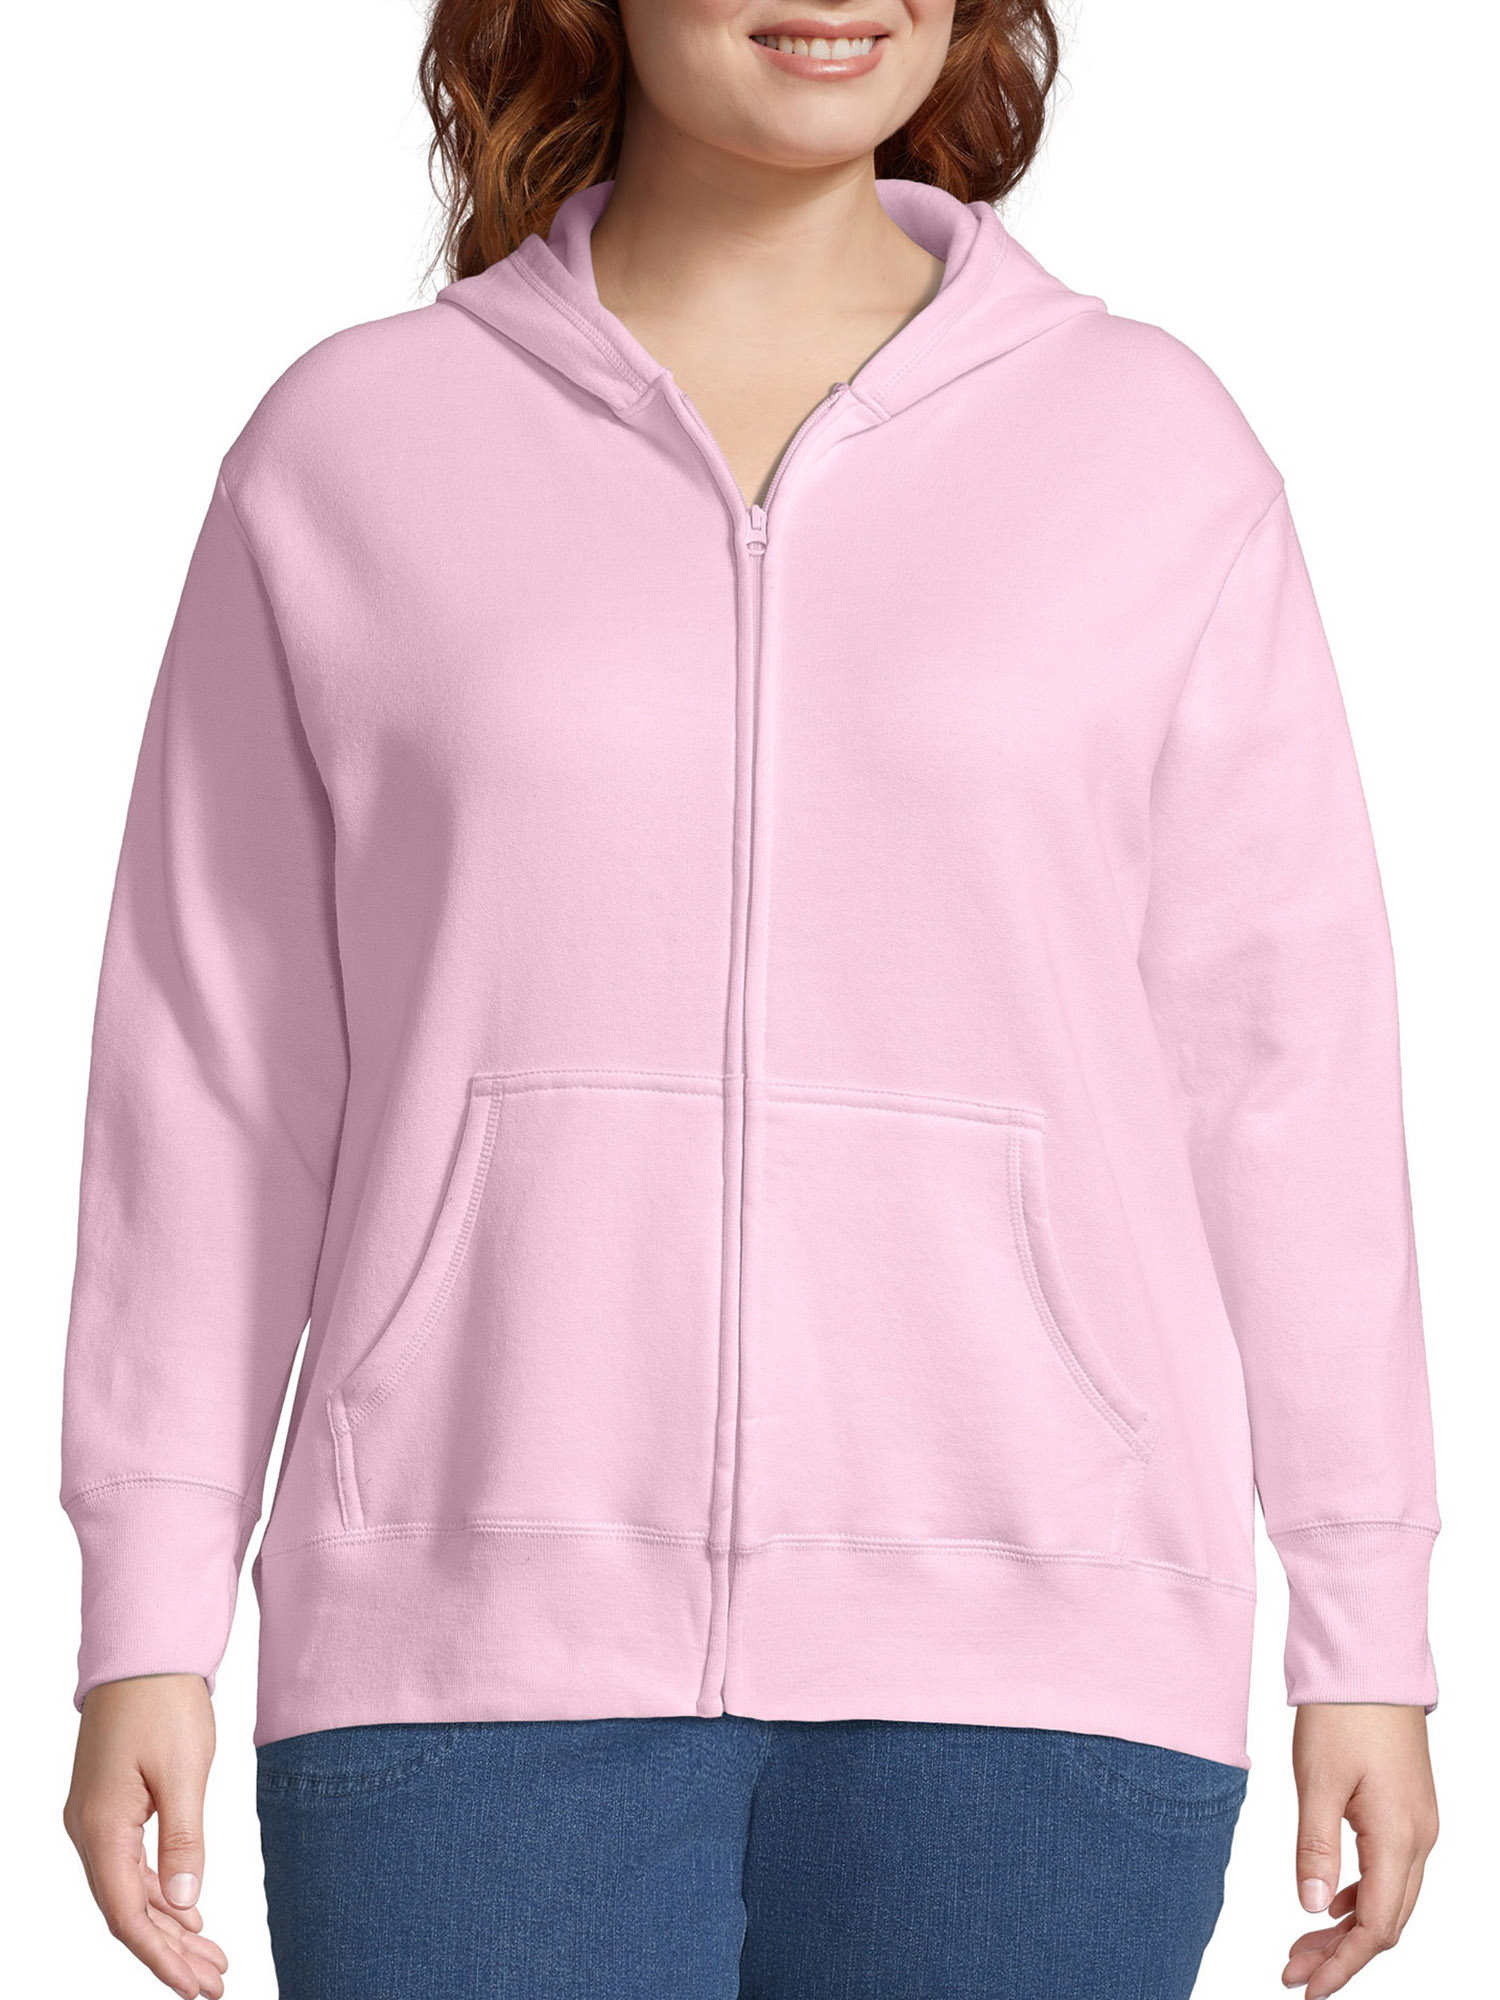 Just My Size Women's Plus Size Fleece Zip Hood Jacket - image 1 of 6